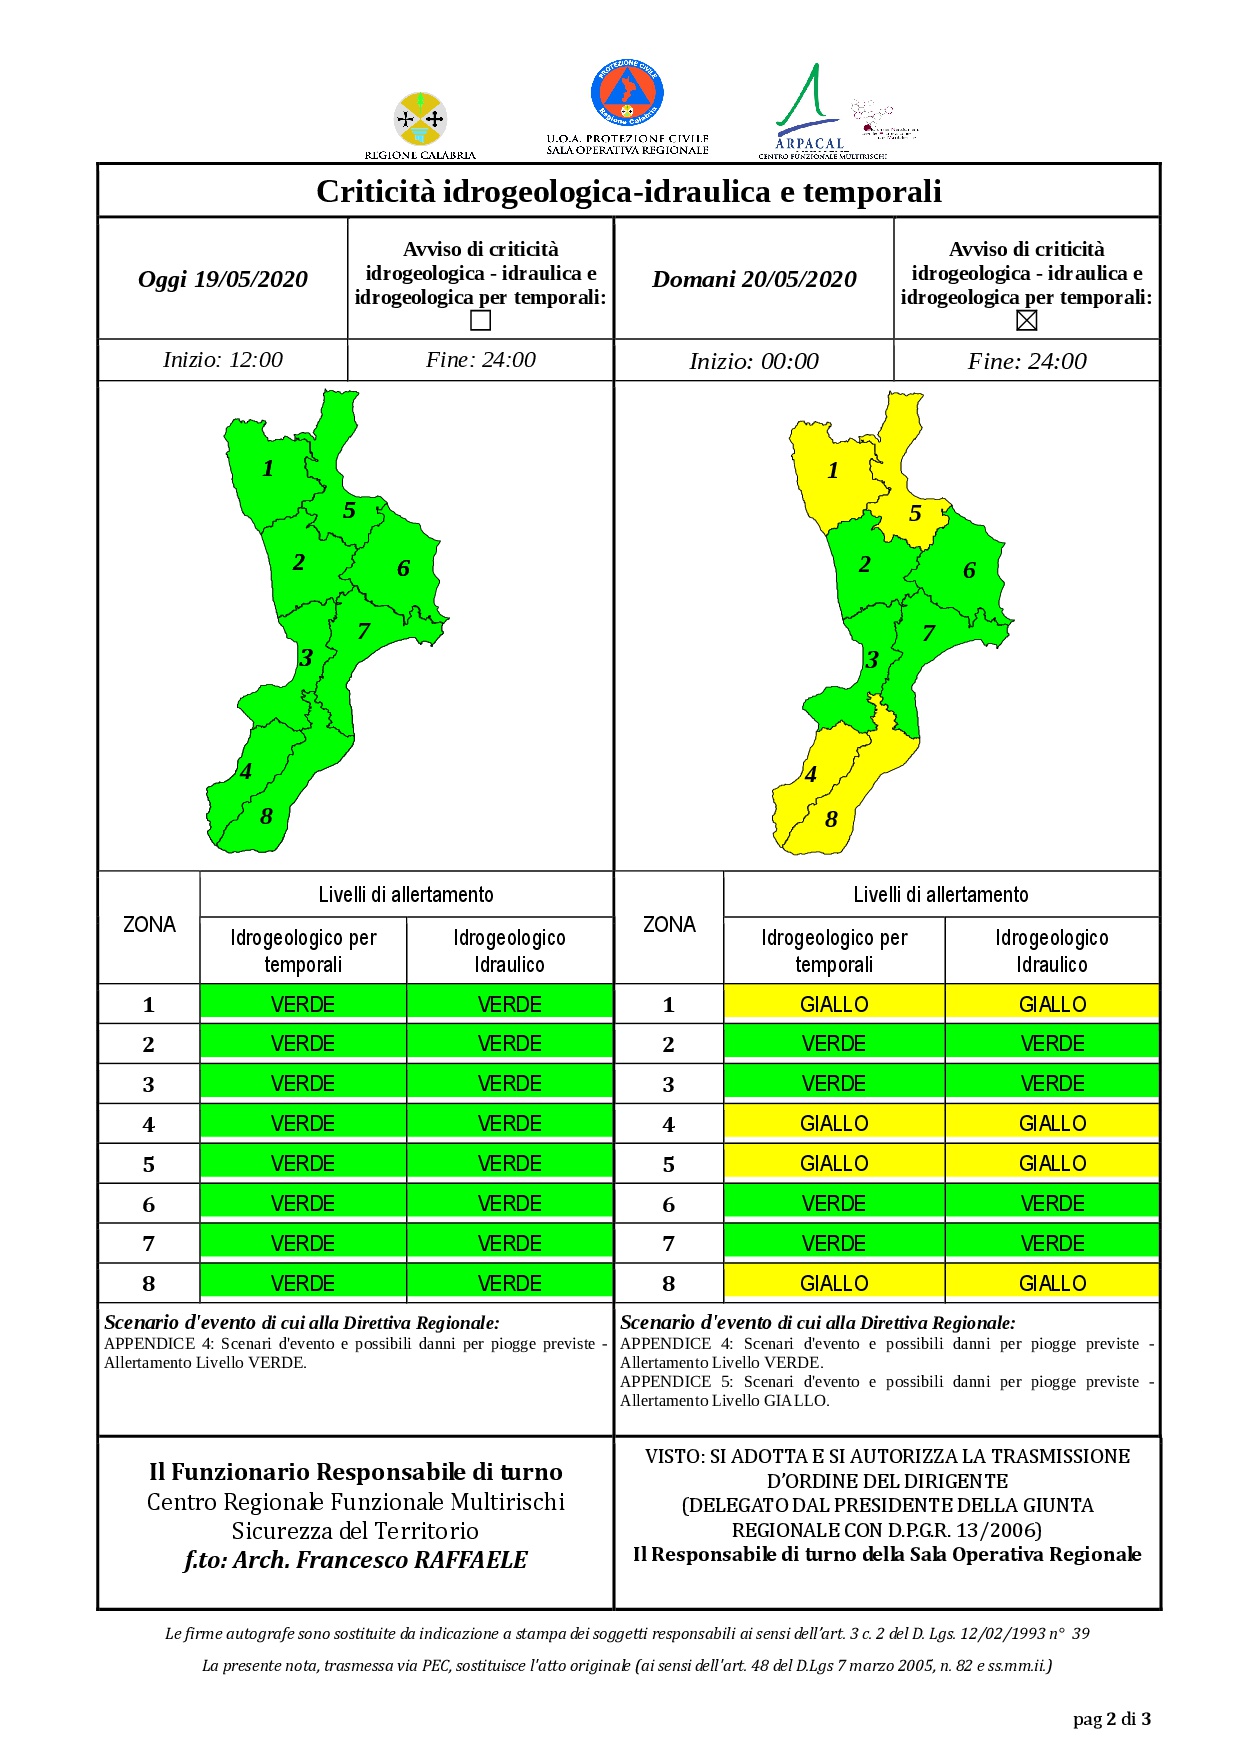 Criticità idrogeologica-idraulica e temporali in Calabria 19-05-2020